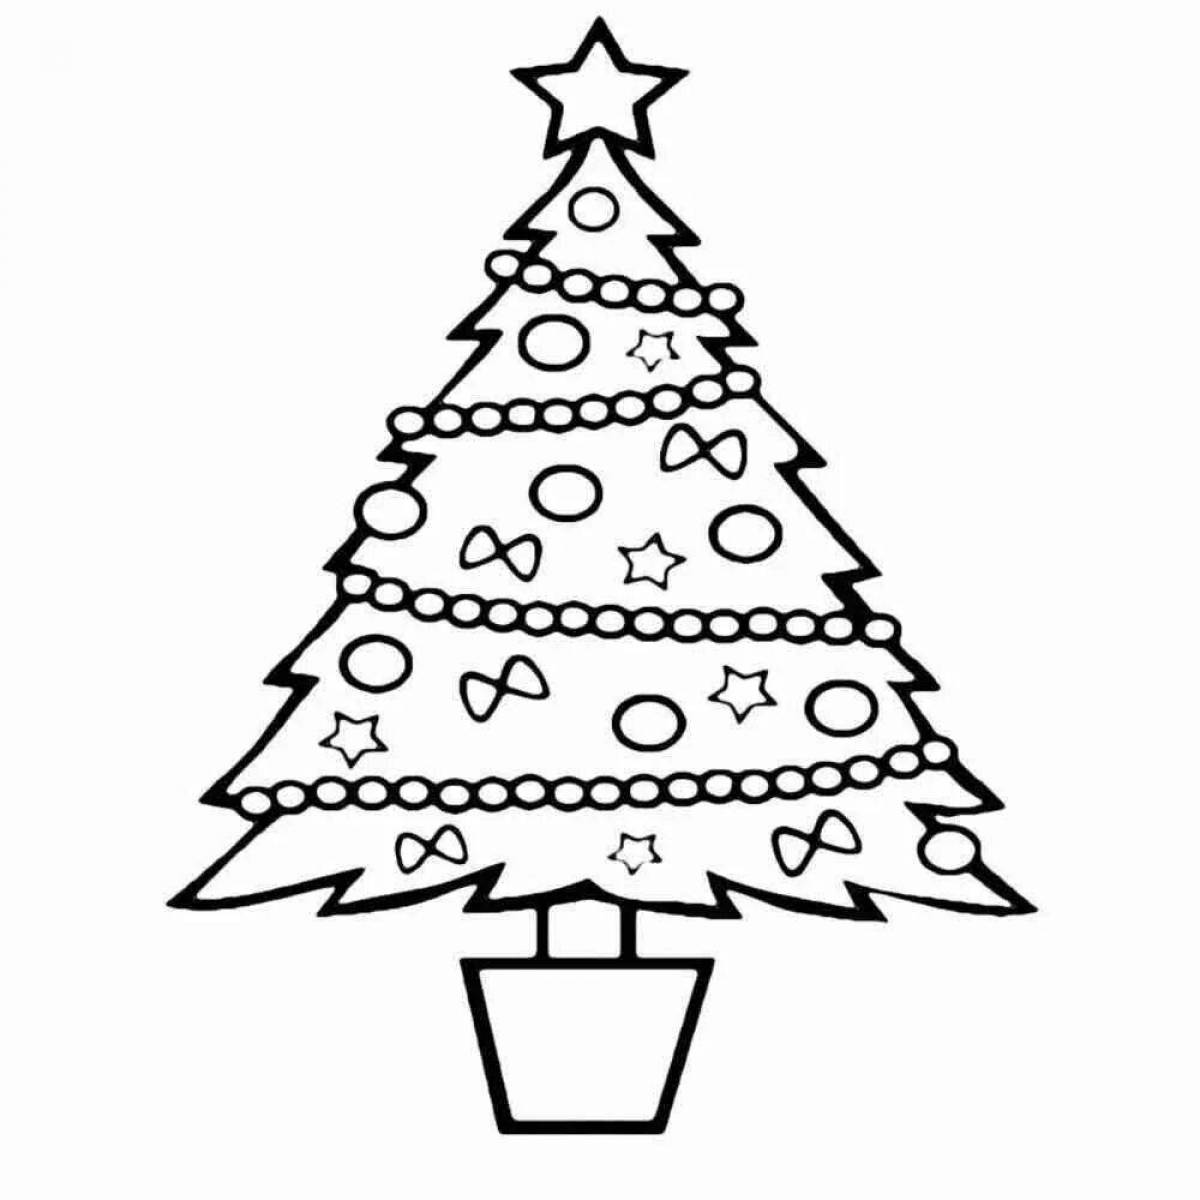 Luxury Christmas tree with balls